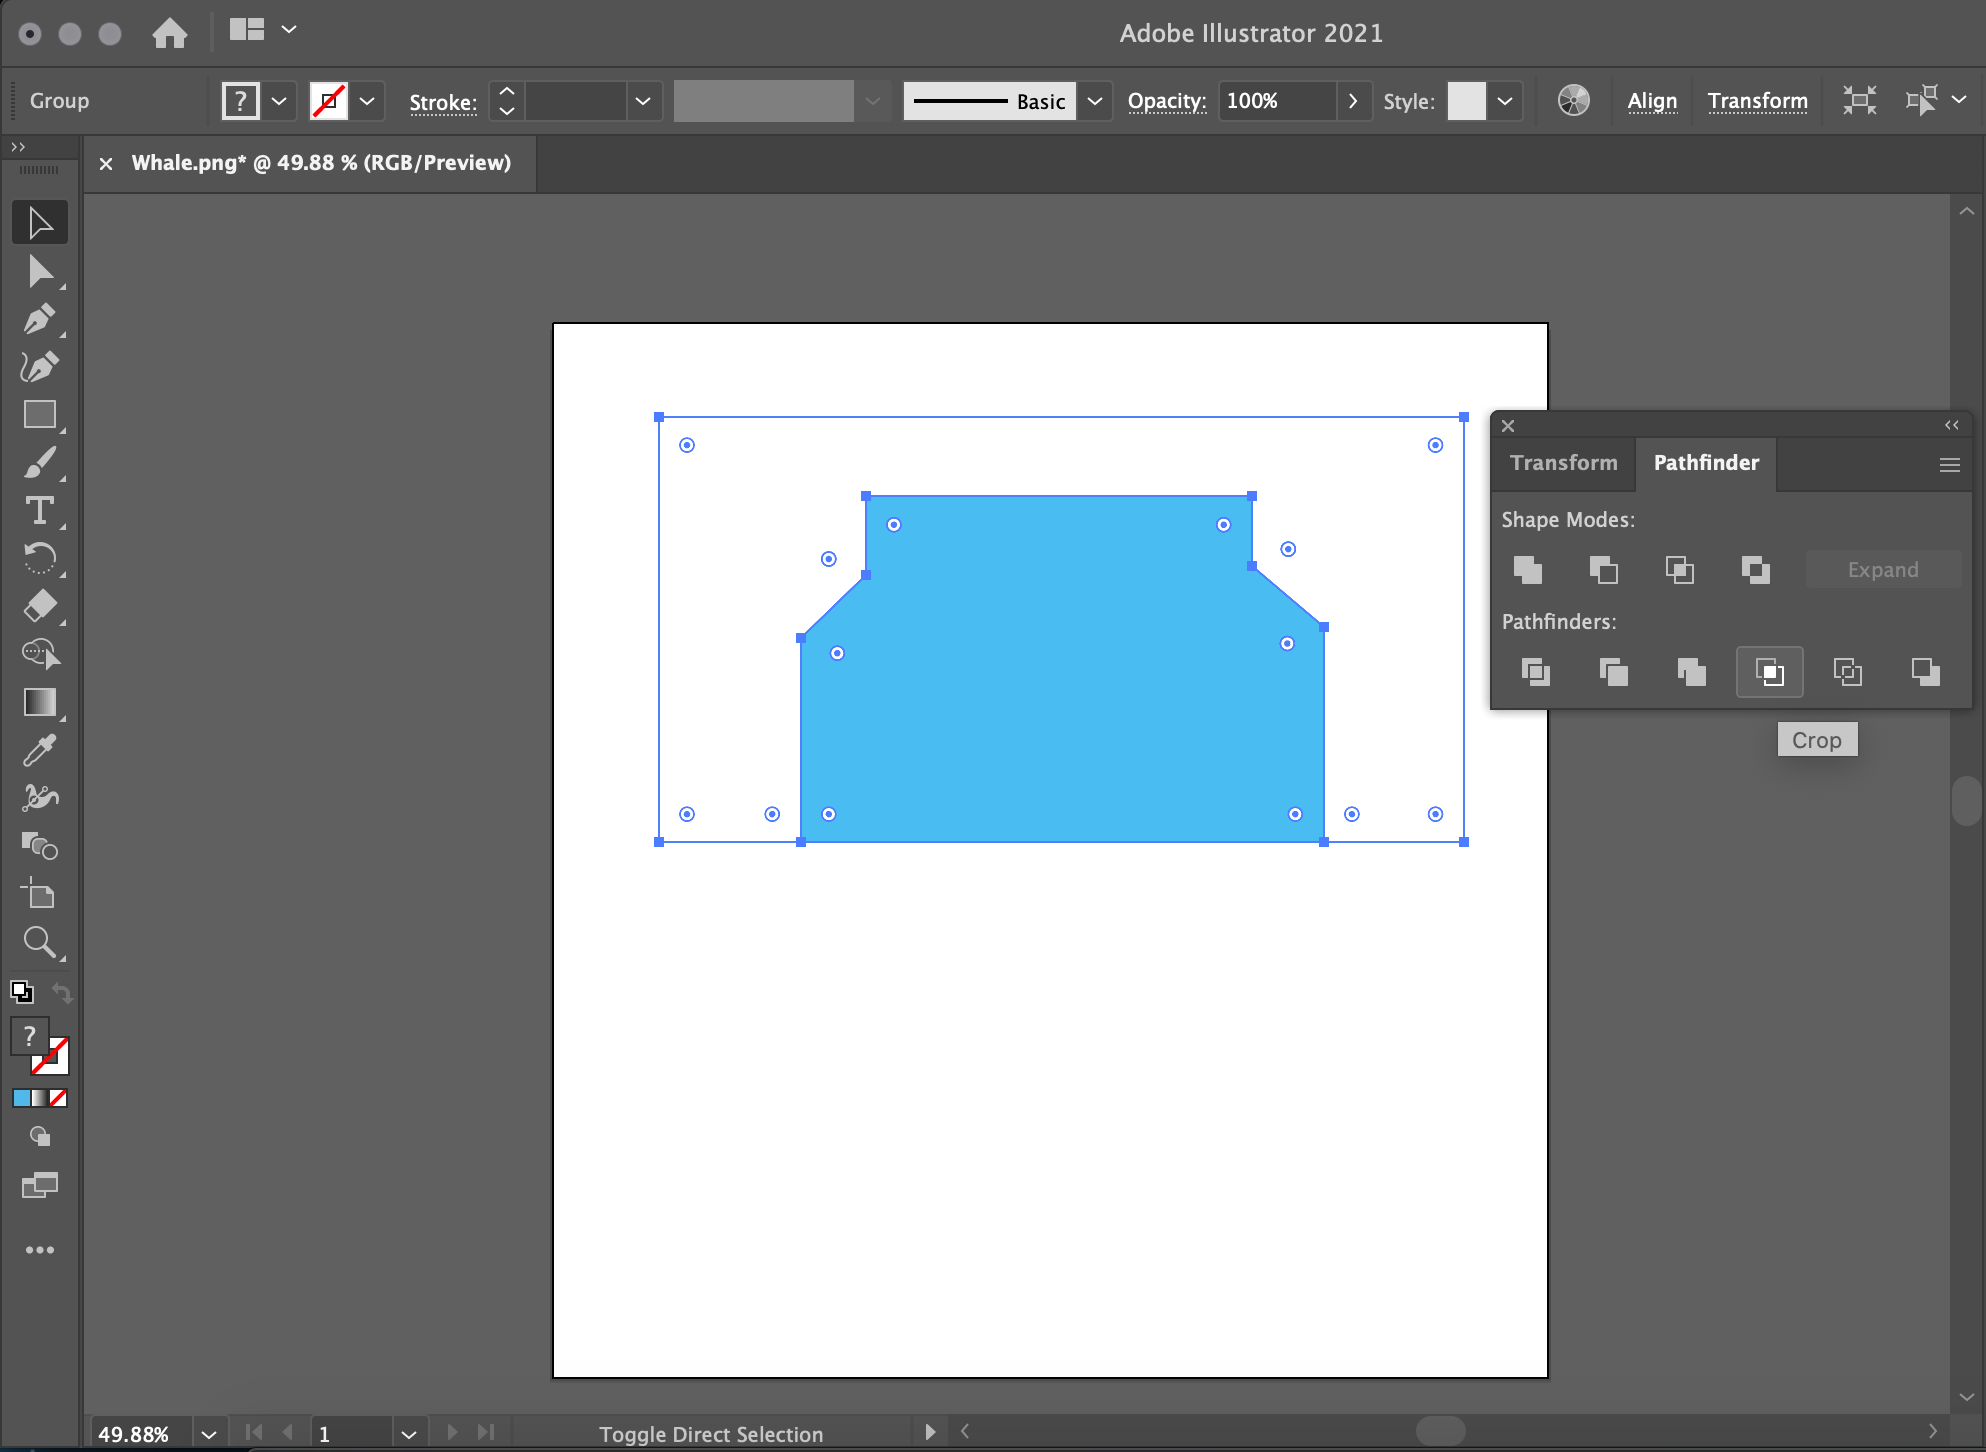 Design UI showing image cropping in Illustrator